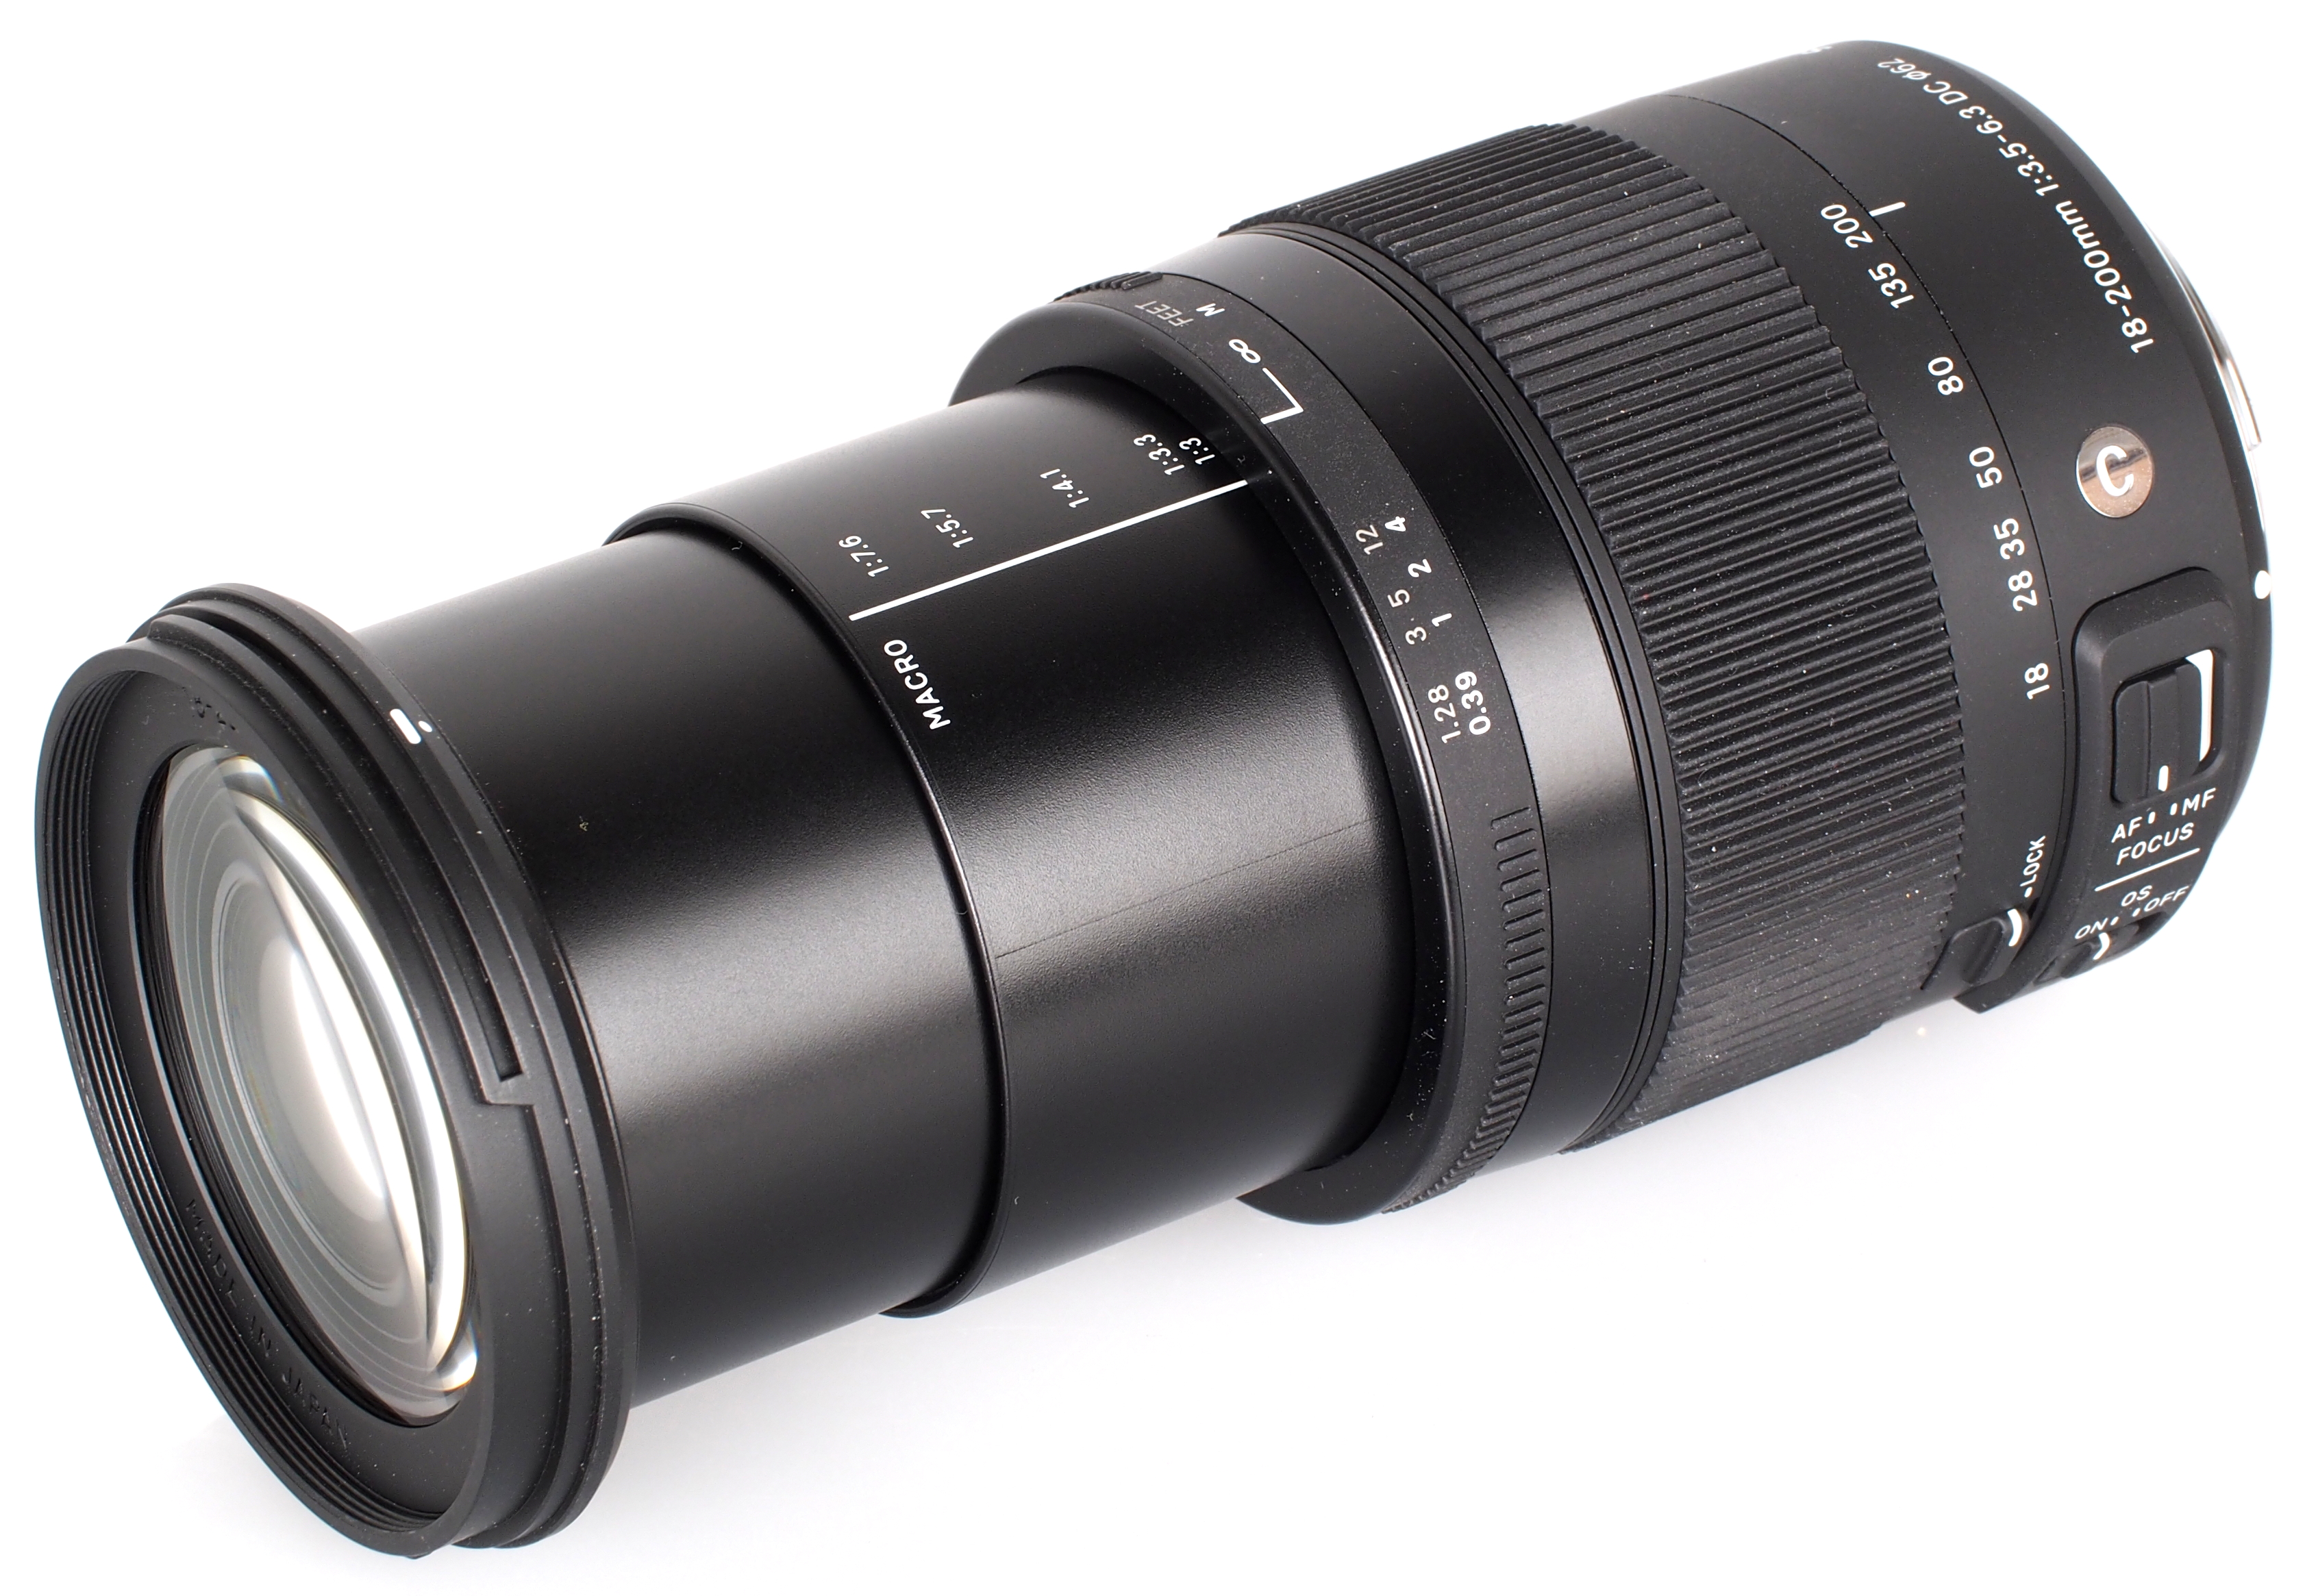 Sigma 18-200mm f/3.5-6.4 DC Macro Lens Review